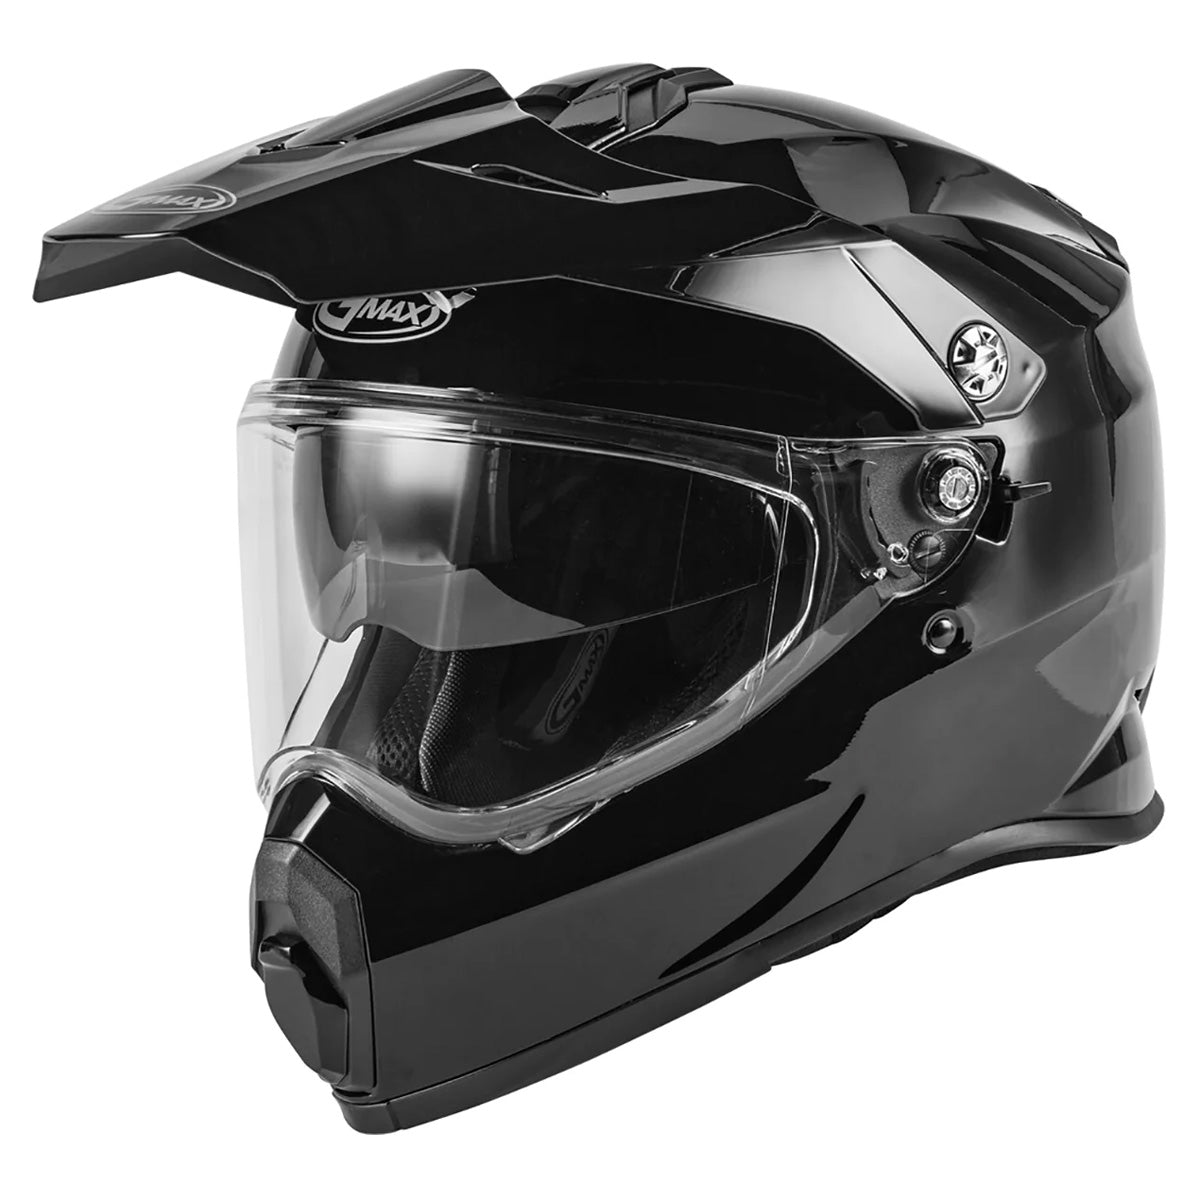 GMAX AT-21 Adventure Adult Off-Road Helmets